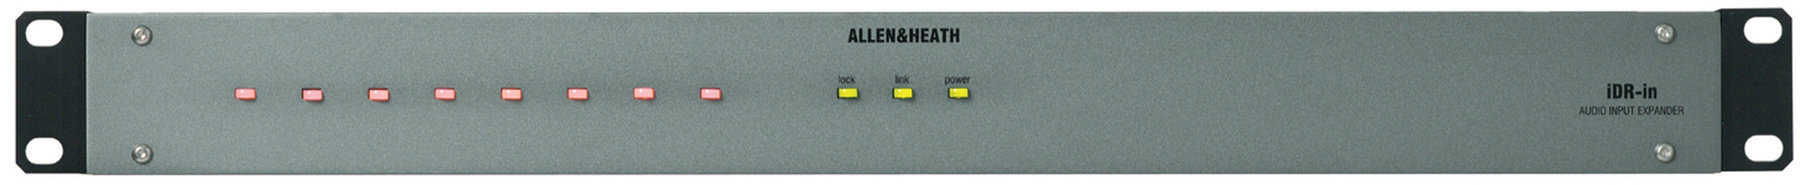 Zaščitna embalaža Allen & Heath iDR In